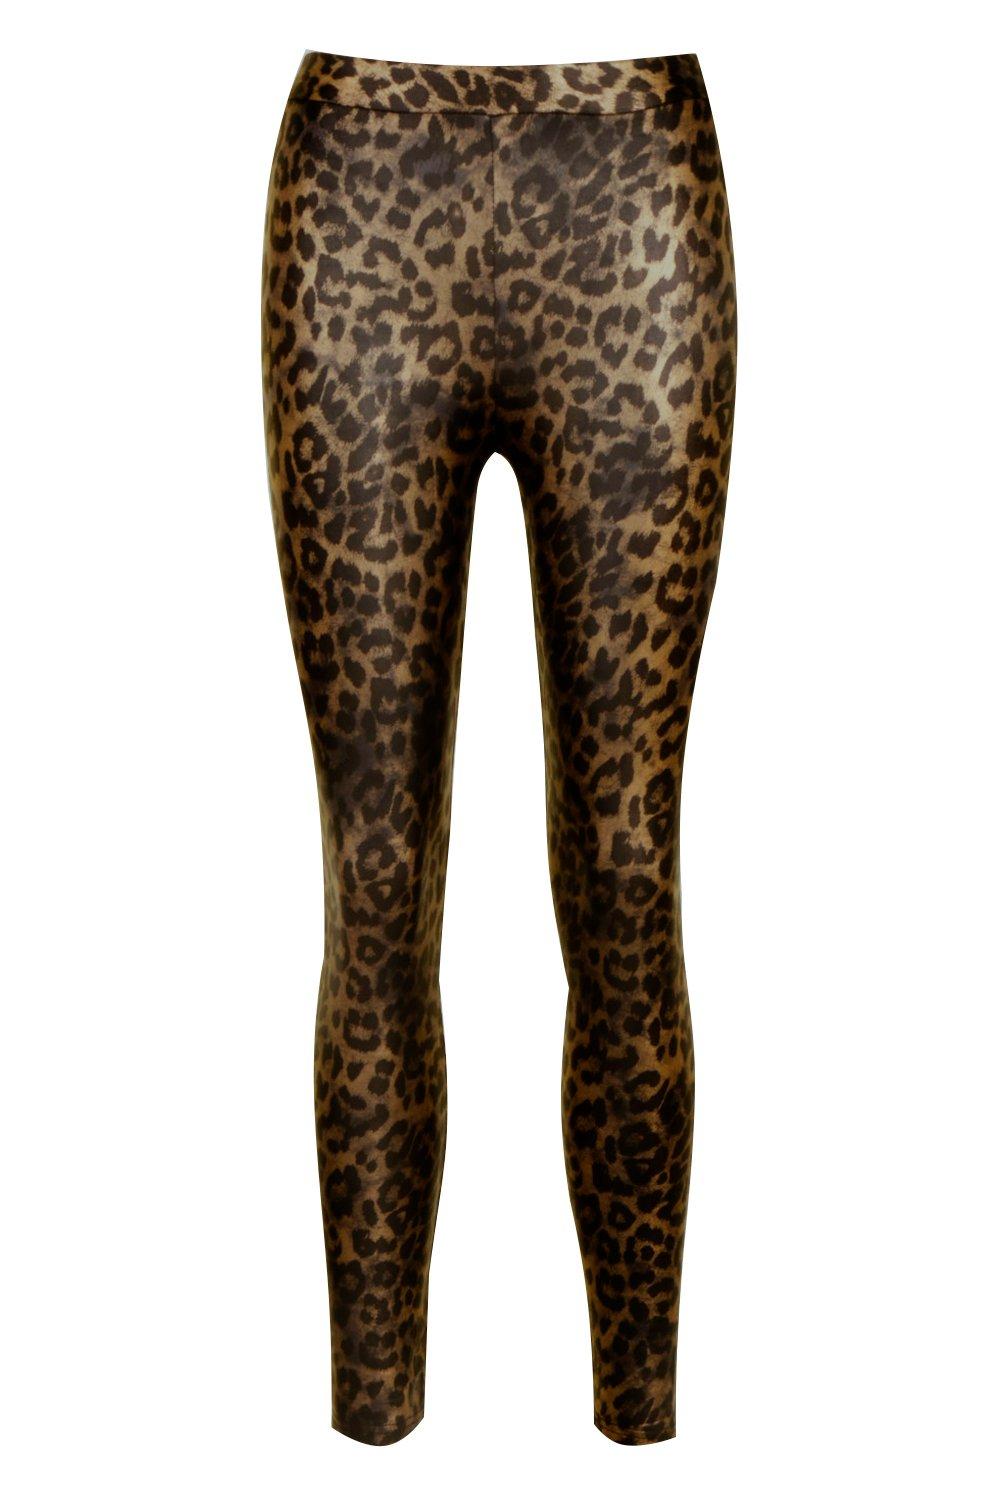 Attraco Women's Faux Leather Leggings Leopard Print Liquid Shine